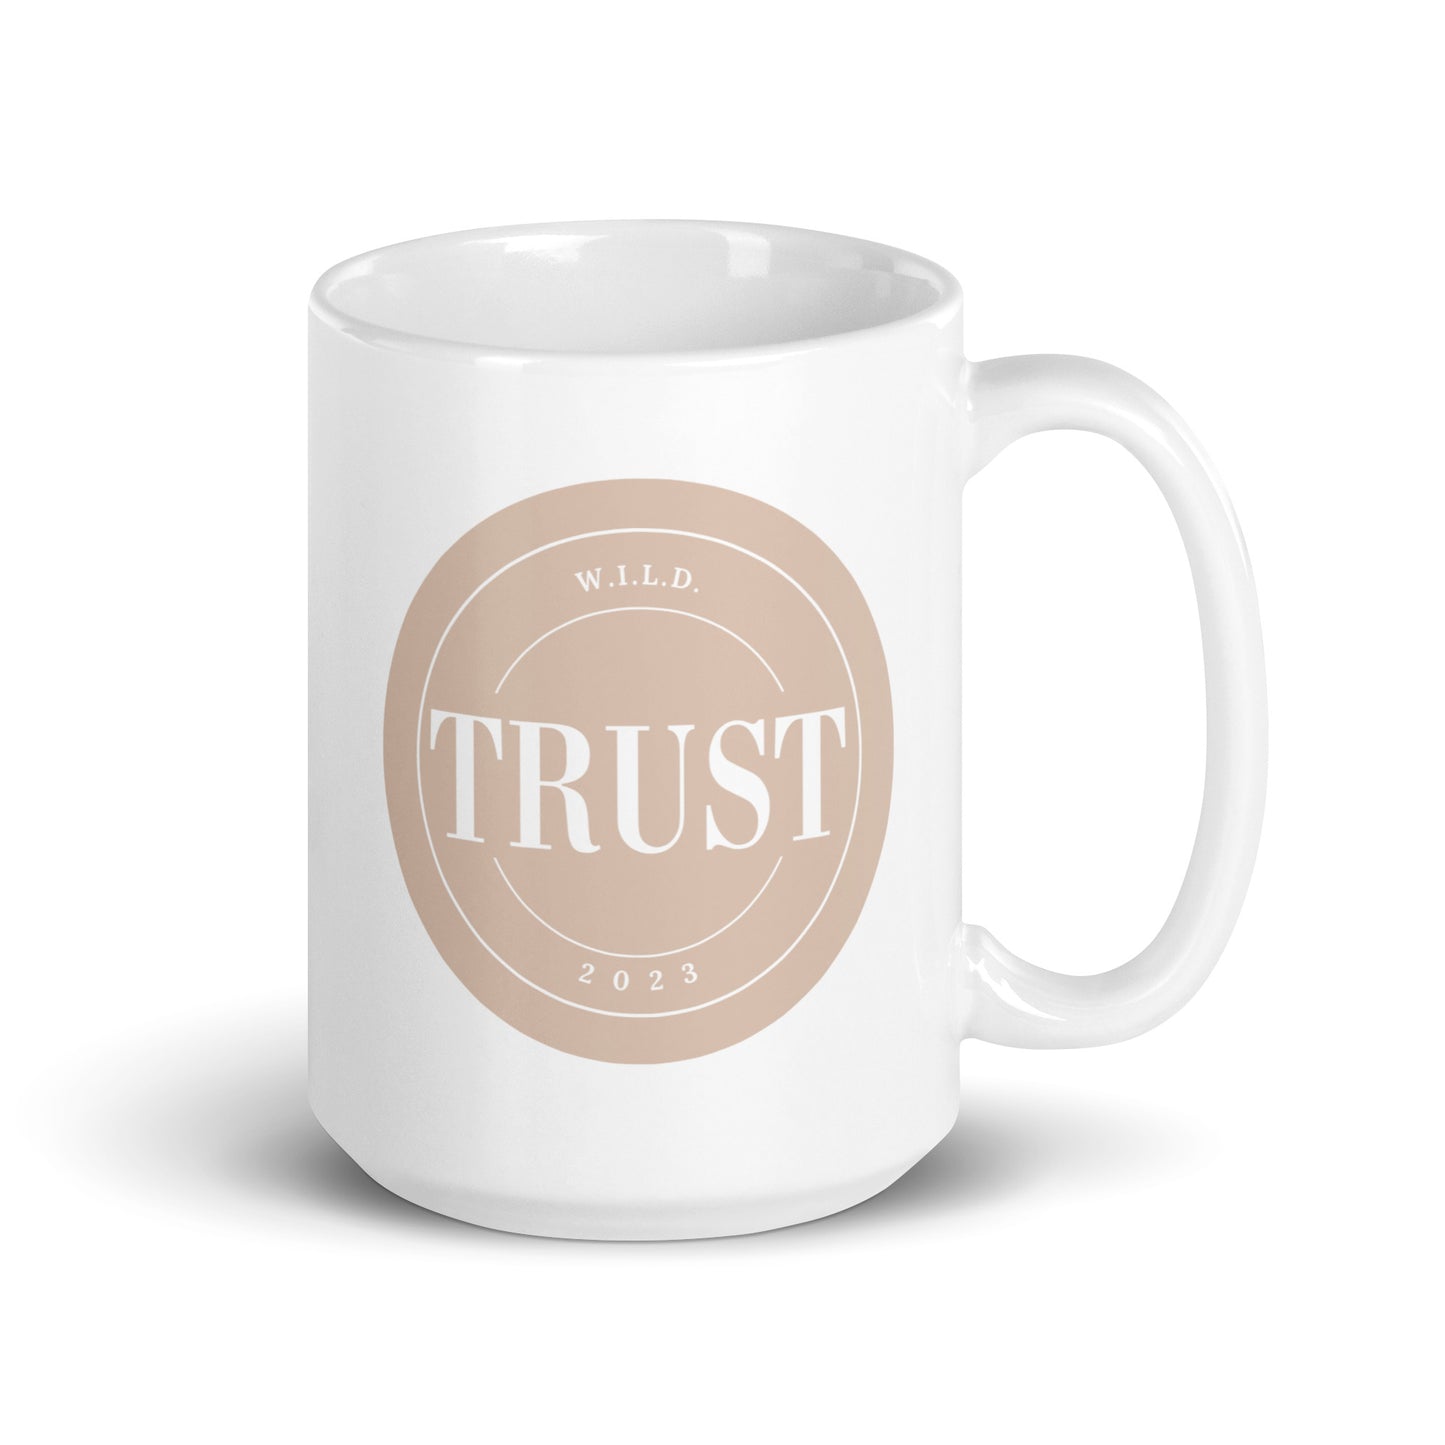 Wild "Trust" Coffee Mug